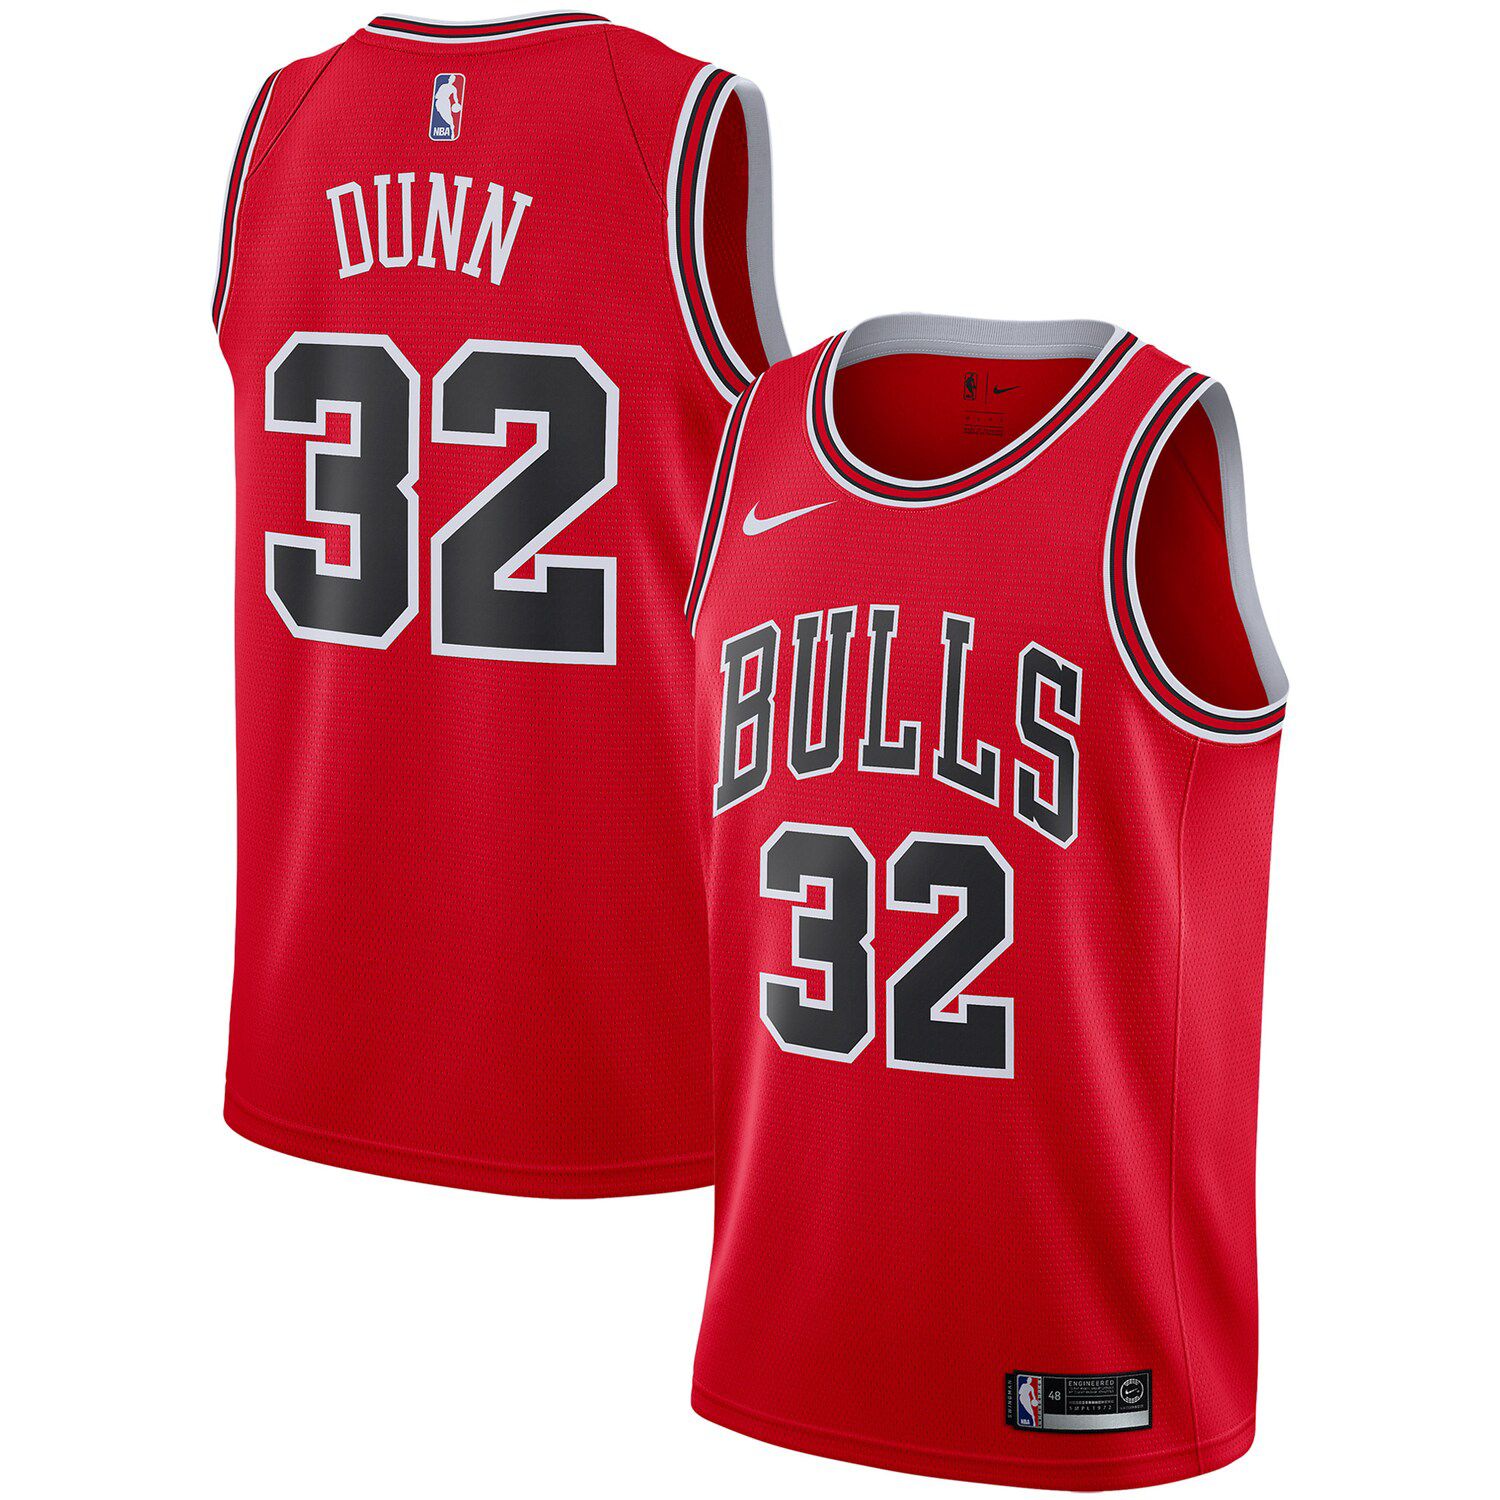 Chicago Bulls Replica Swingman Jersey 